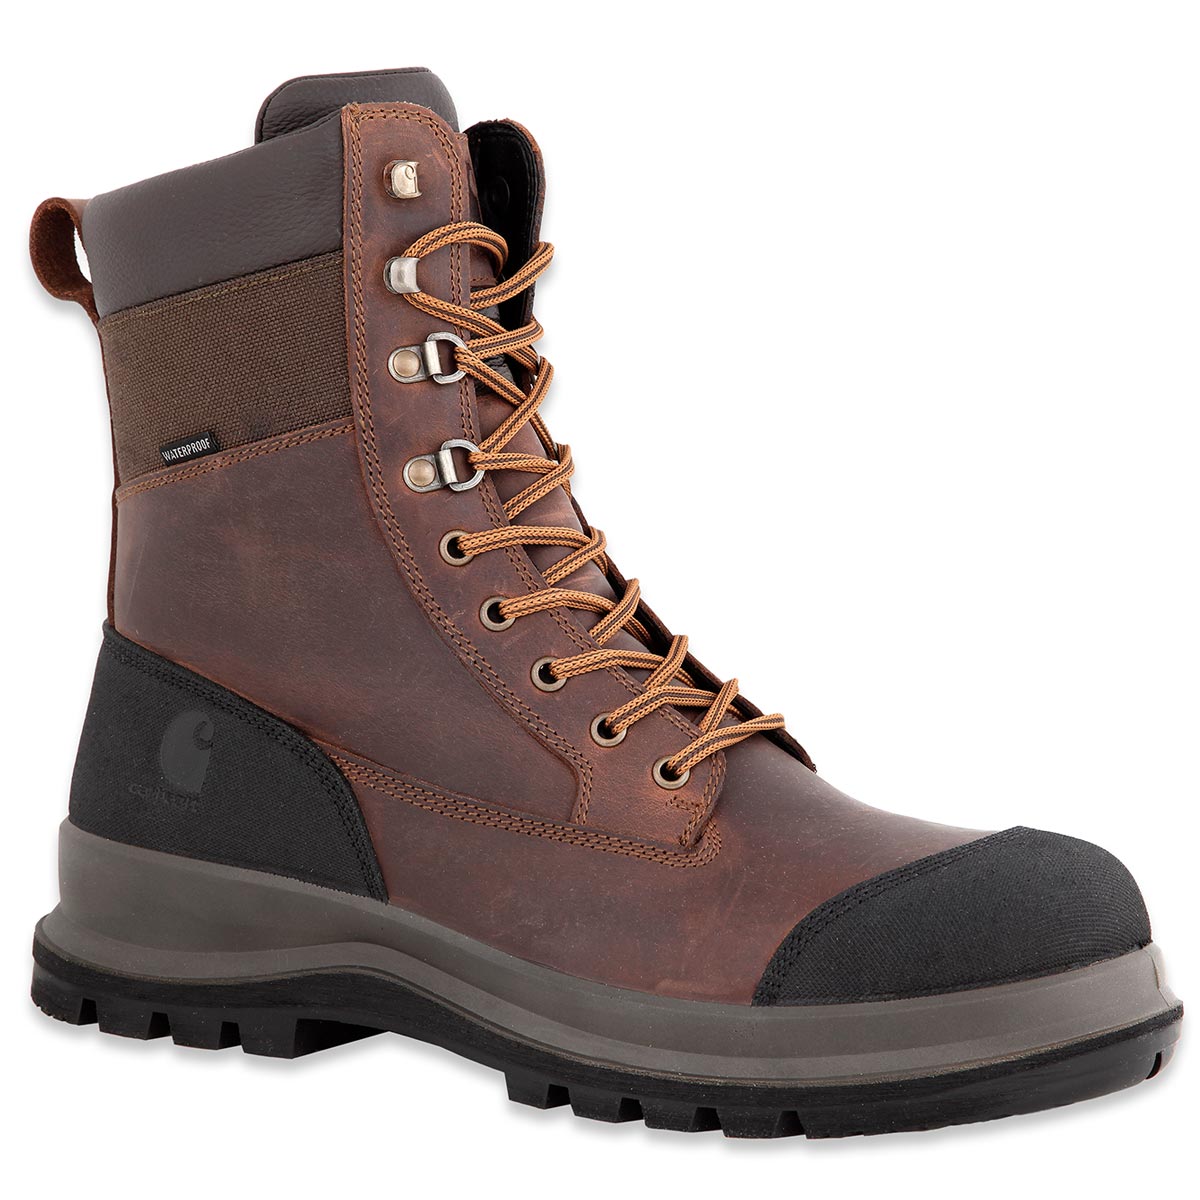 Carhartt Detroit Winter Work Boots S3 wasserdicht brown - 1